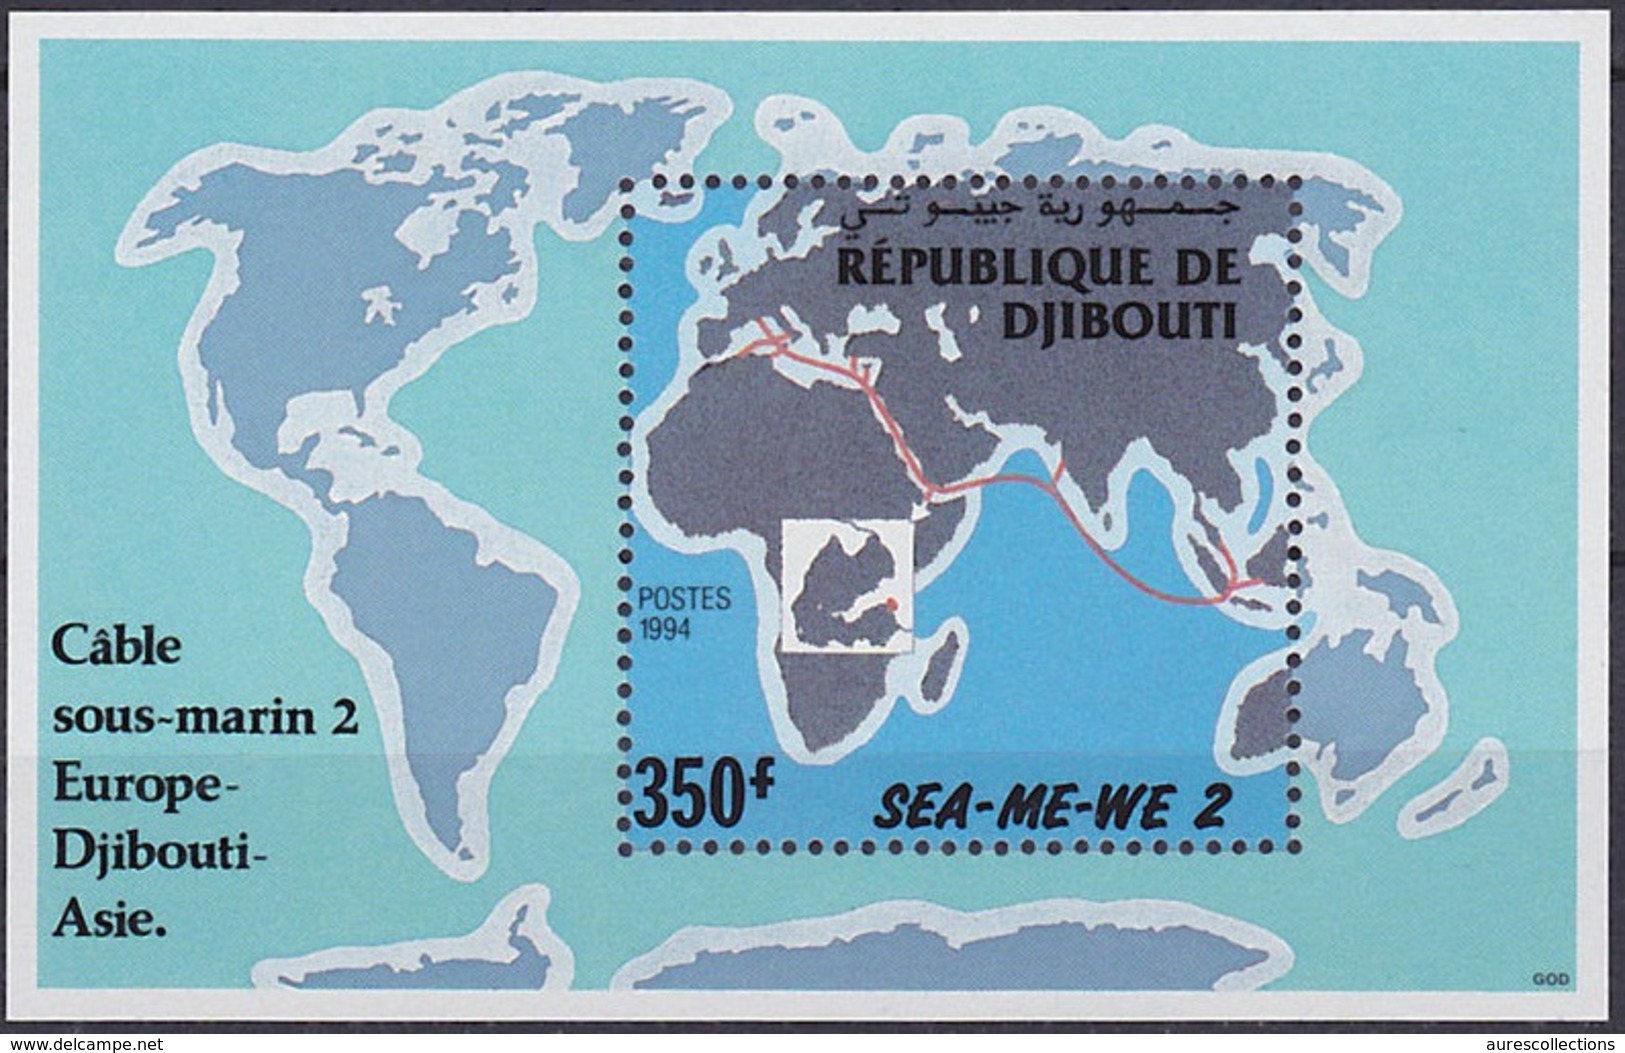 DJIBOUTI  1994 SUBMARINE WIRE INTERNET EUROPE ASIE CABLE SOUS-MARIN Michel Mi. Mi 149 BLOC BLOCK S/S SHEET SEA-ME-WE MNH - Géographie